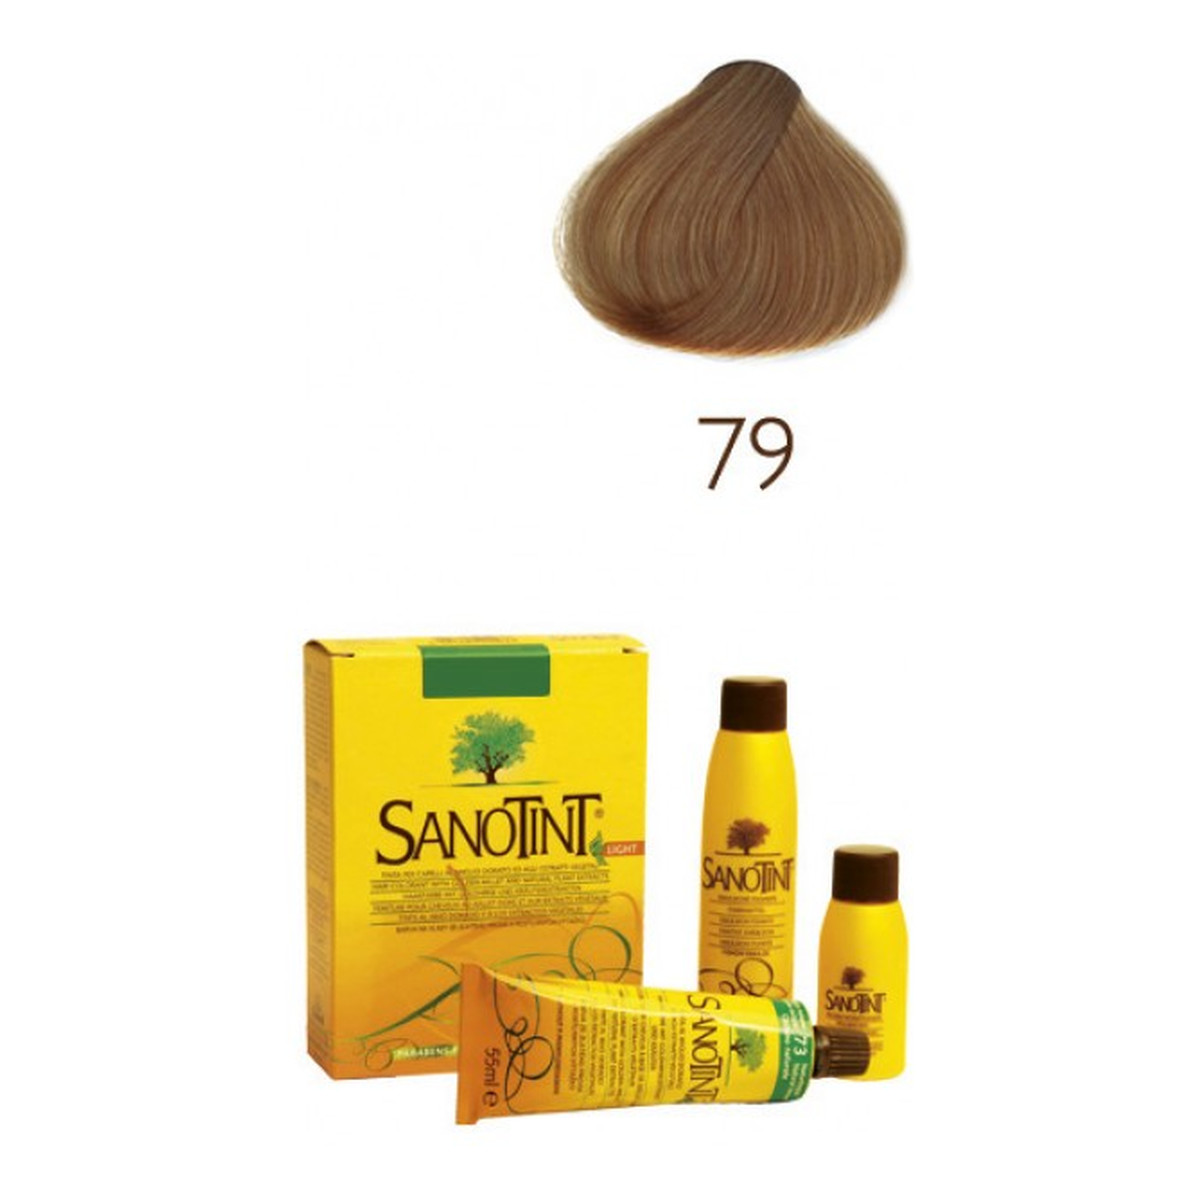 Cosval Sanotint Sensitive Farba do włosów Naturalny Blond (79) 125ml